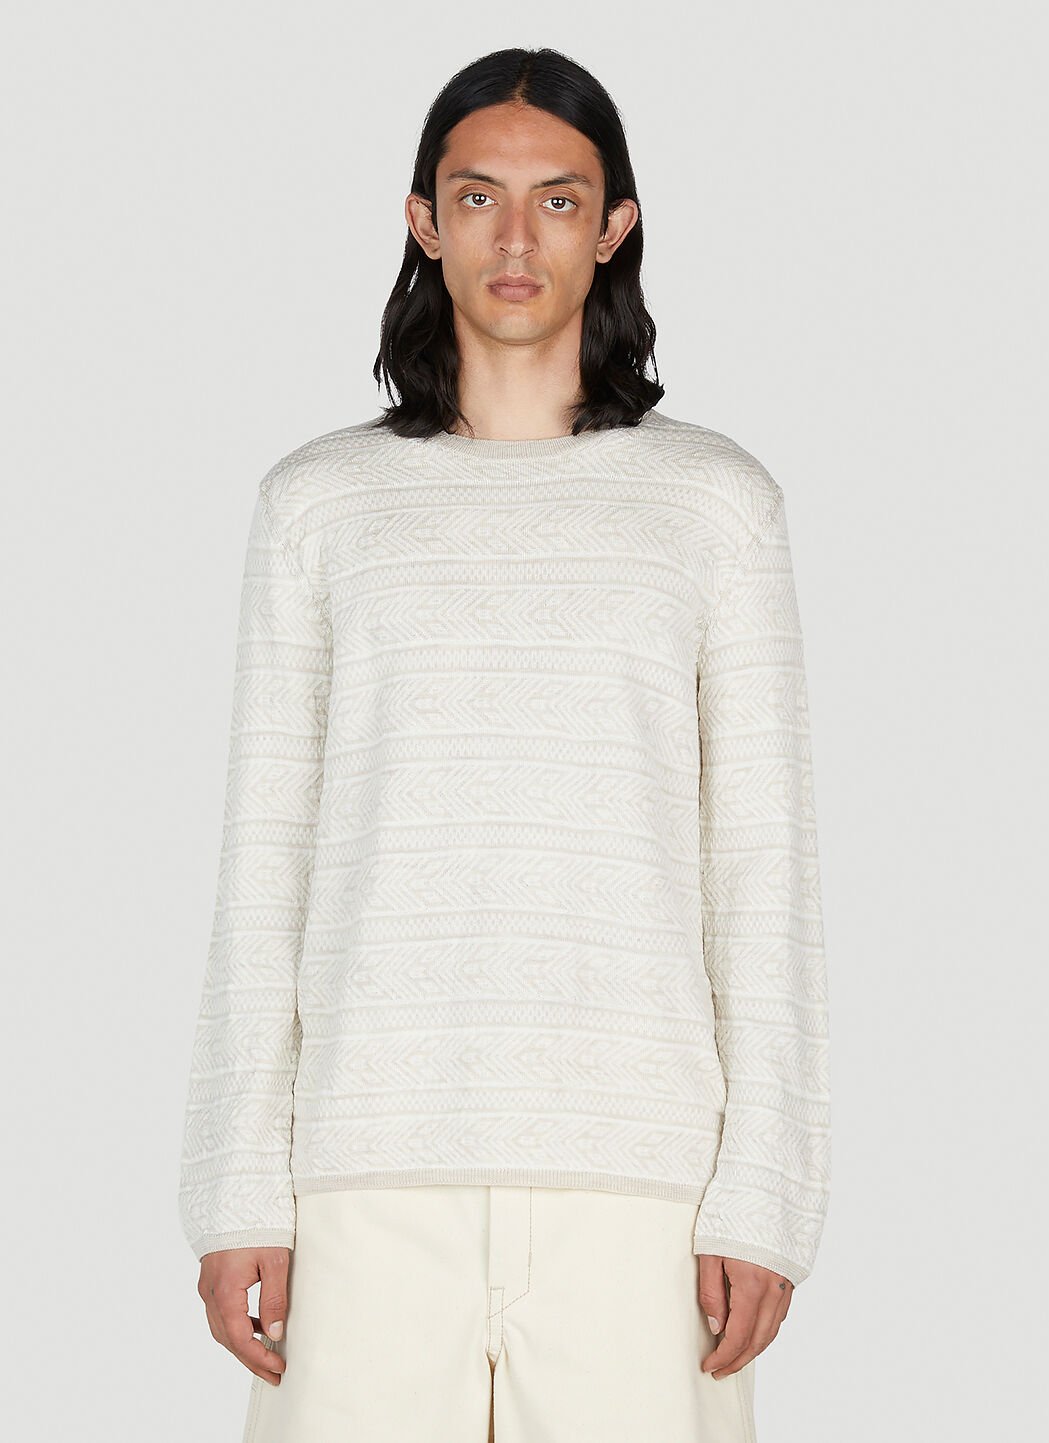 Comme des Garçons SHIRT Jacquard Sweater ホワイト cdg0156002